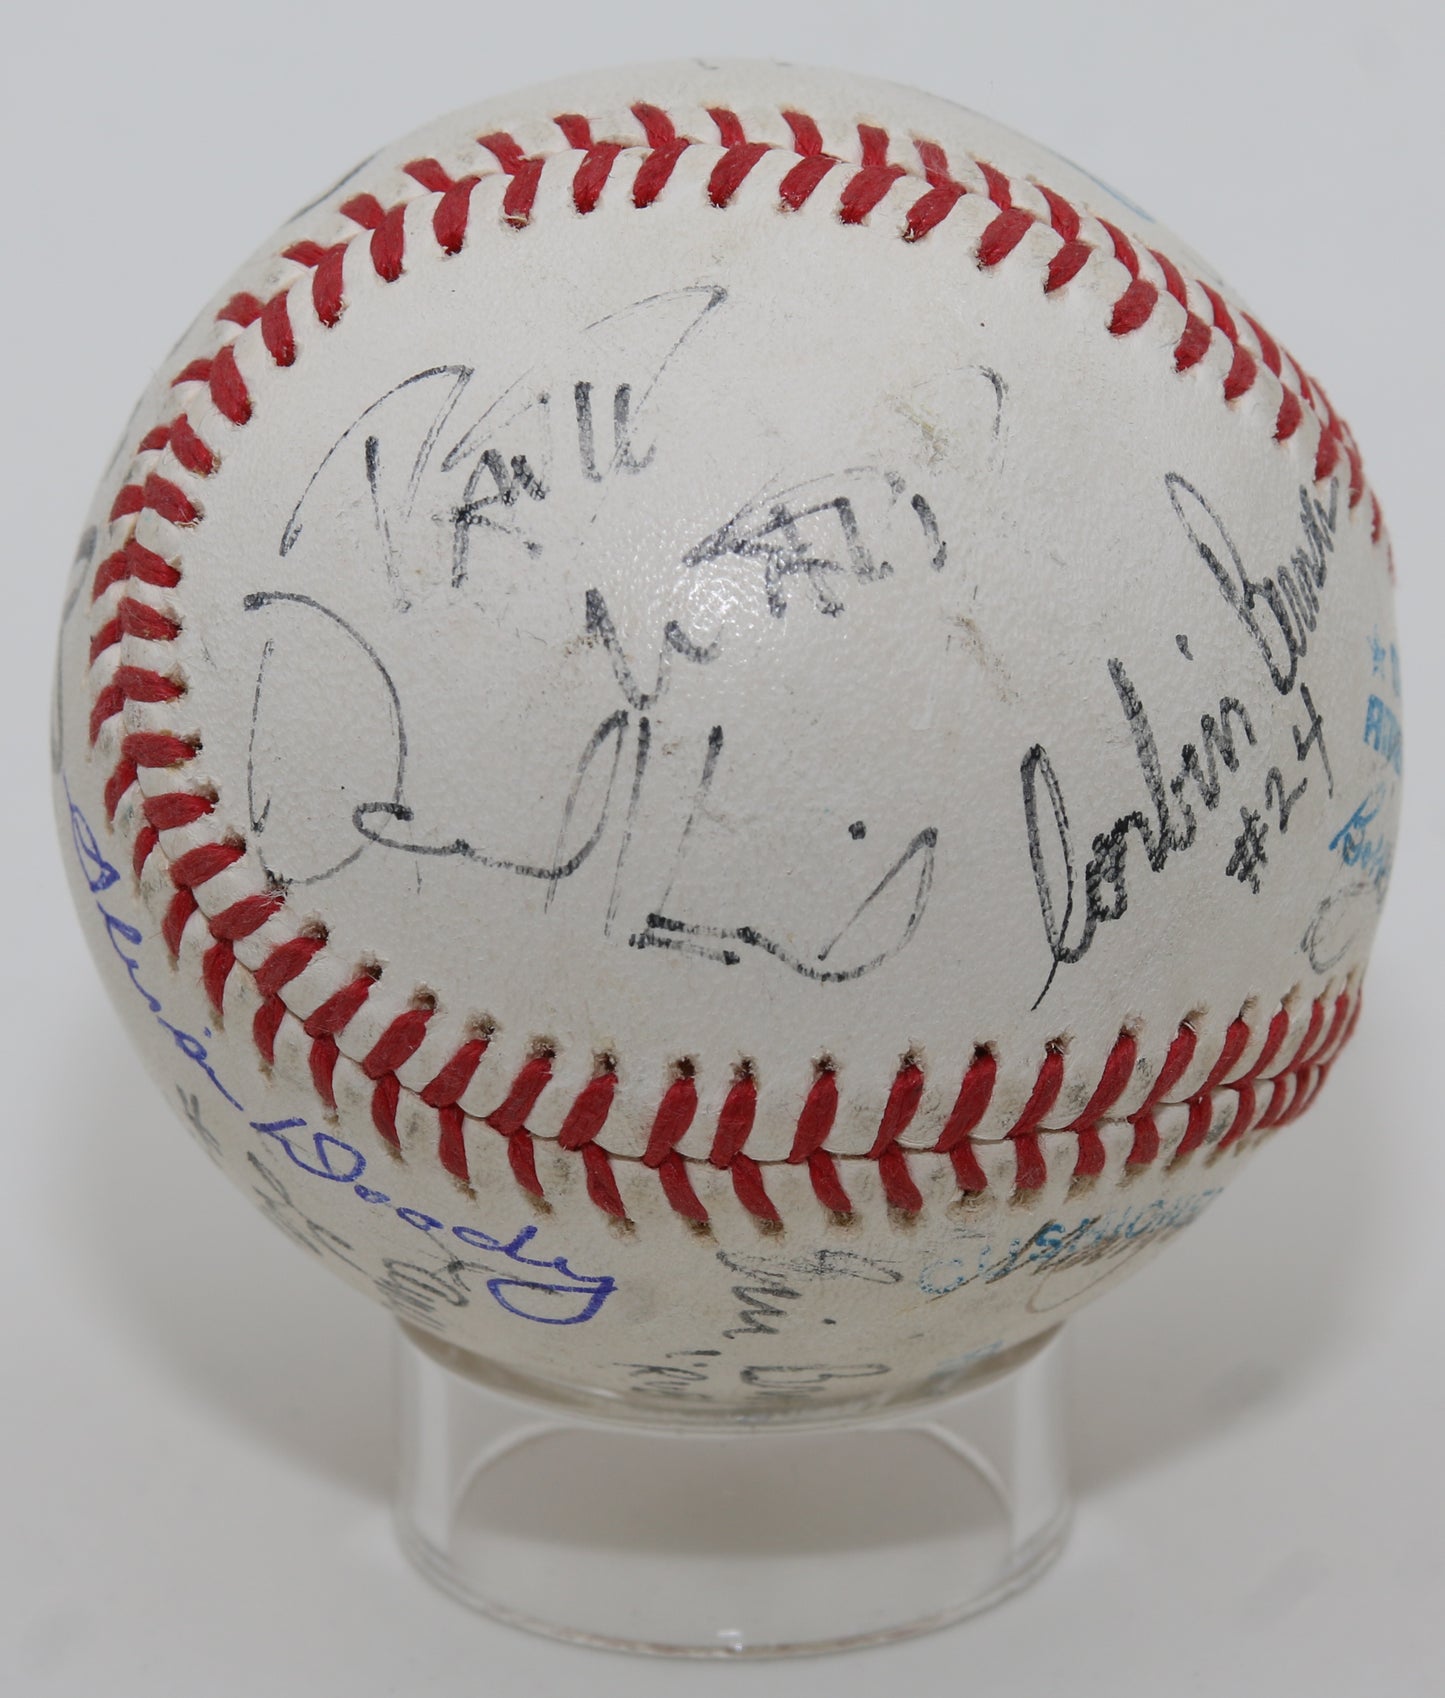 
                  
                    Major League II Cast Autographed Baseball - Signed by Charlie Sheen, Tom Berenger, Corbin Bernsen, Omar Epps, Dennis Haysbert, Alison Doody, +9
                  
                